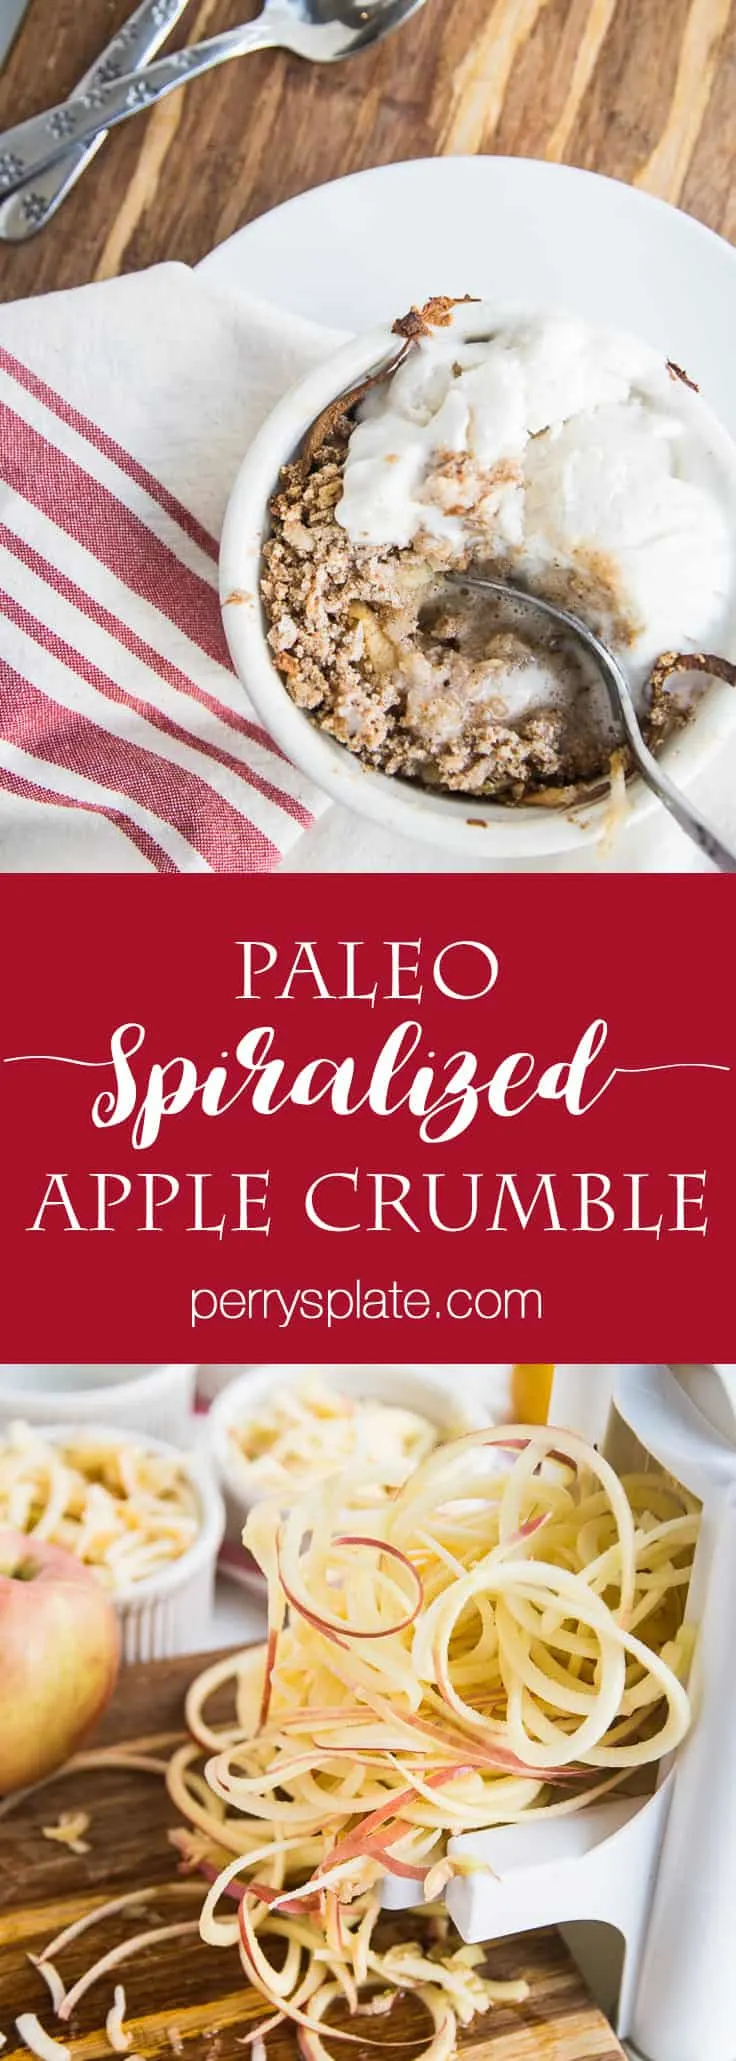 Spiralized Paleo Apple Crumble | paleo recipes | apple recipes | gluten free recipes | dairy free recipes | paleo dessert recipes | perrysplate.com